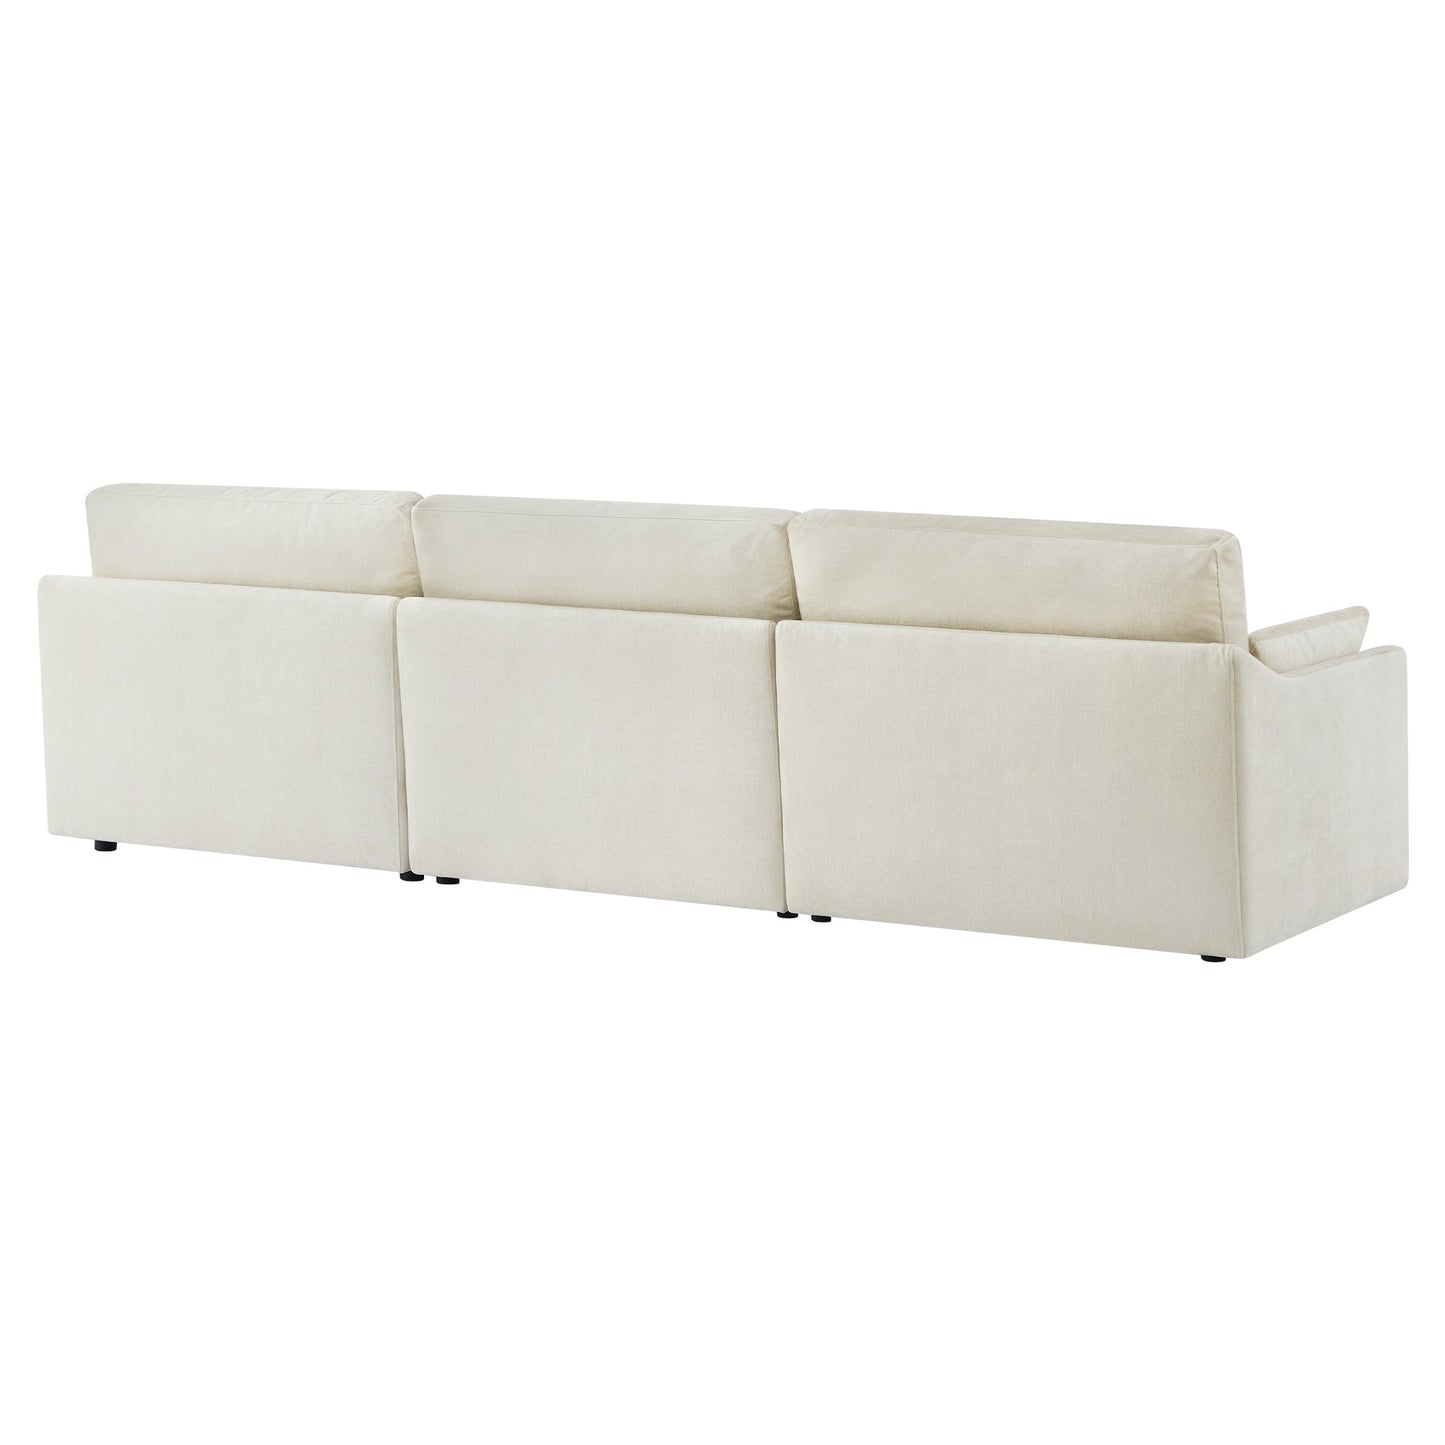 CHITA LIVING-Kenna 3-Piece Modular Sofa (131")-Sofas-Fabric-Cream-